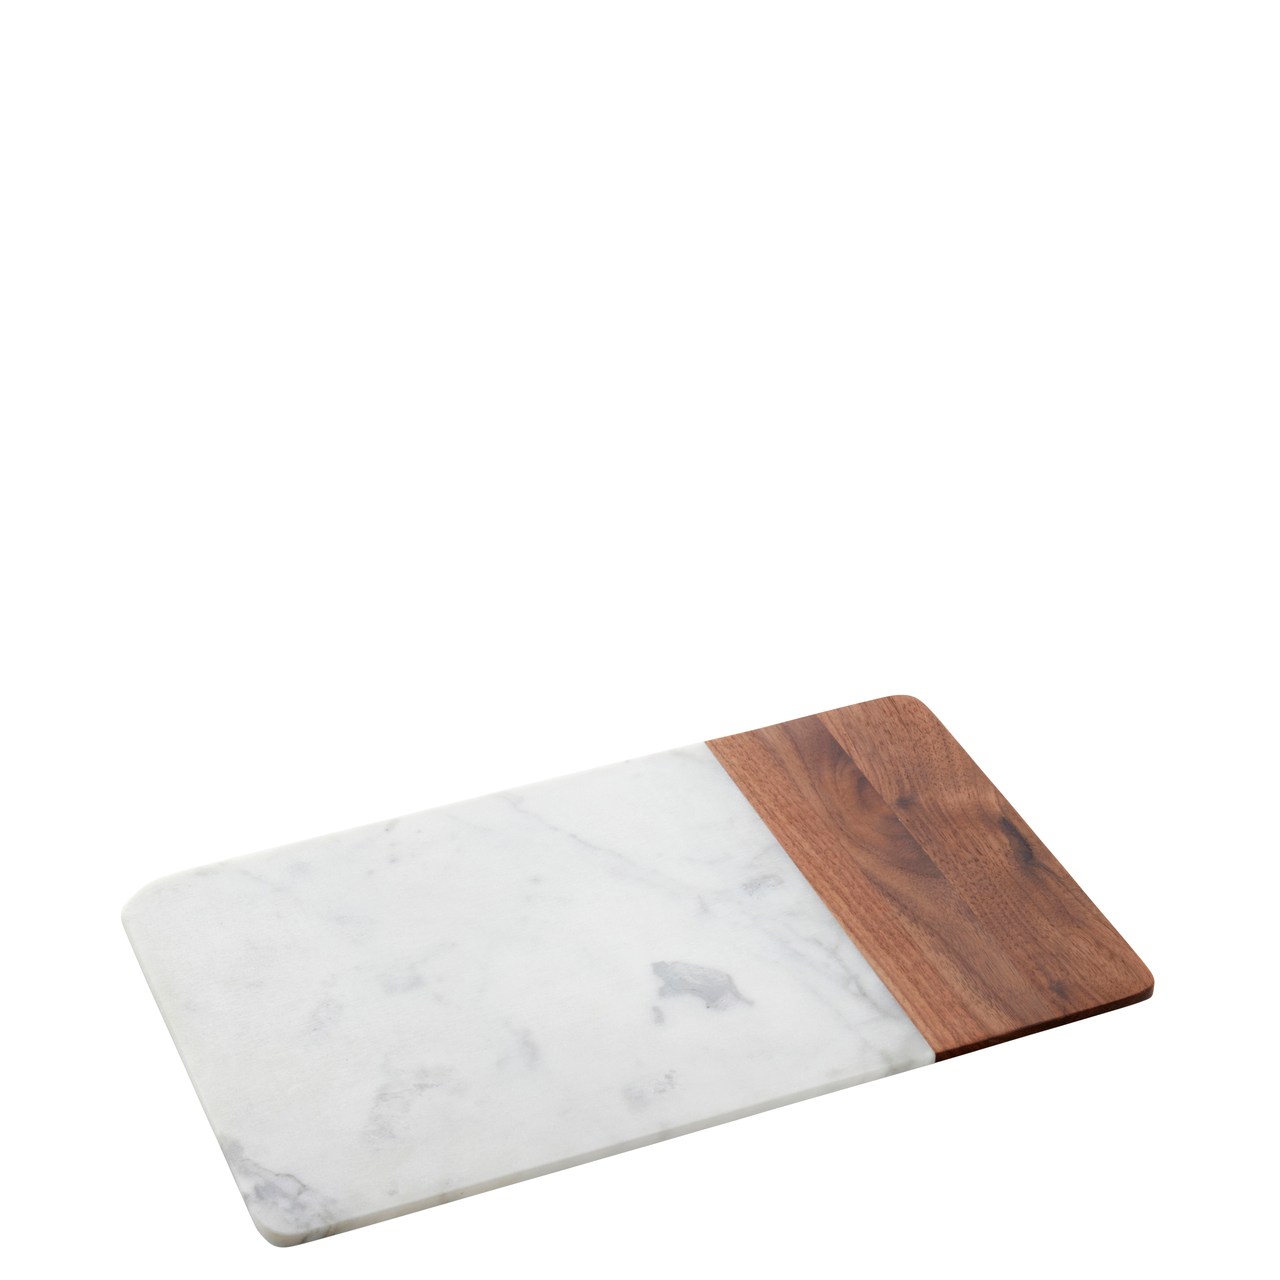 Board rectangular marble/wood 30,5x18,4x